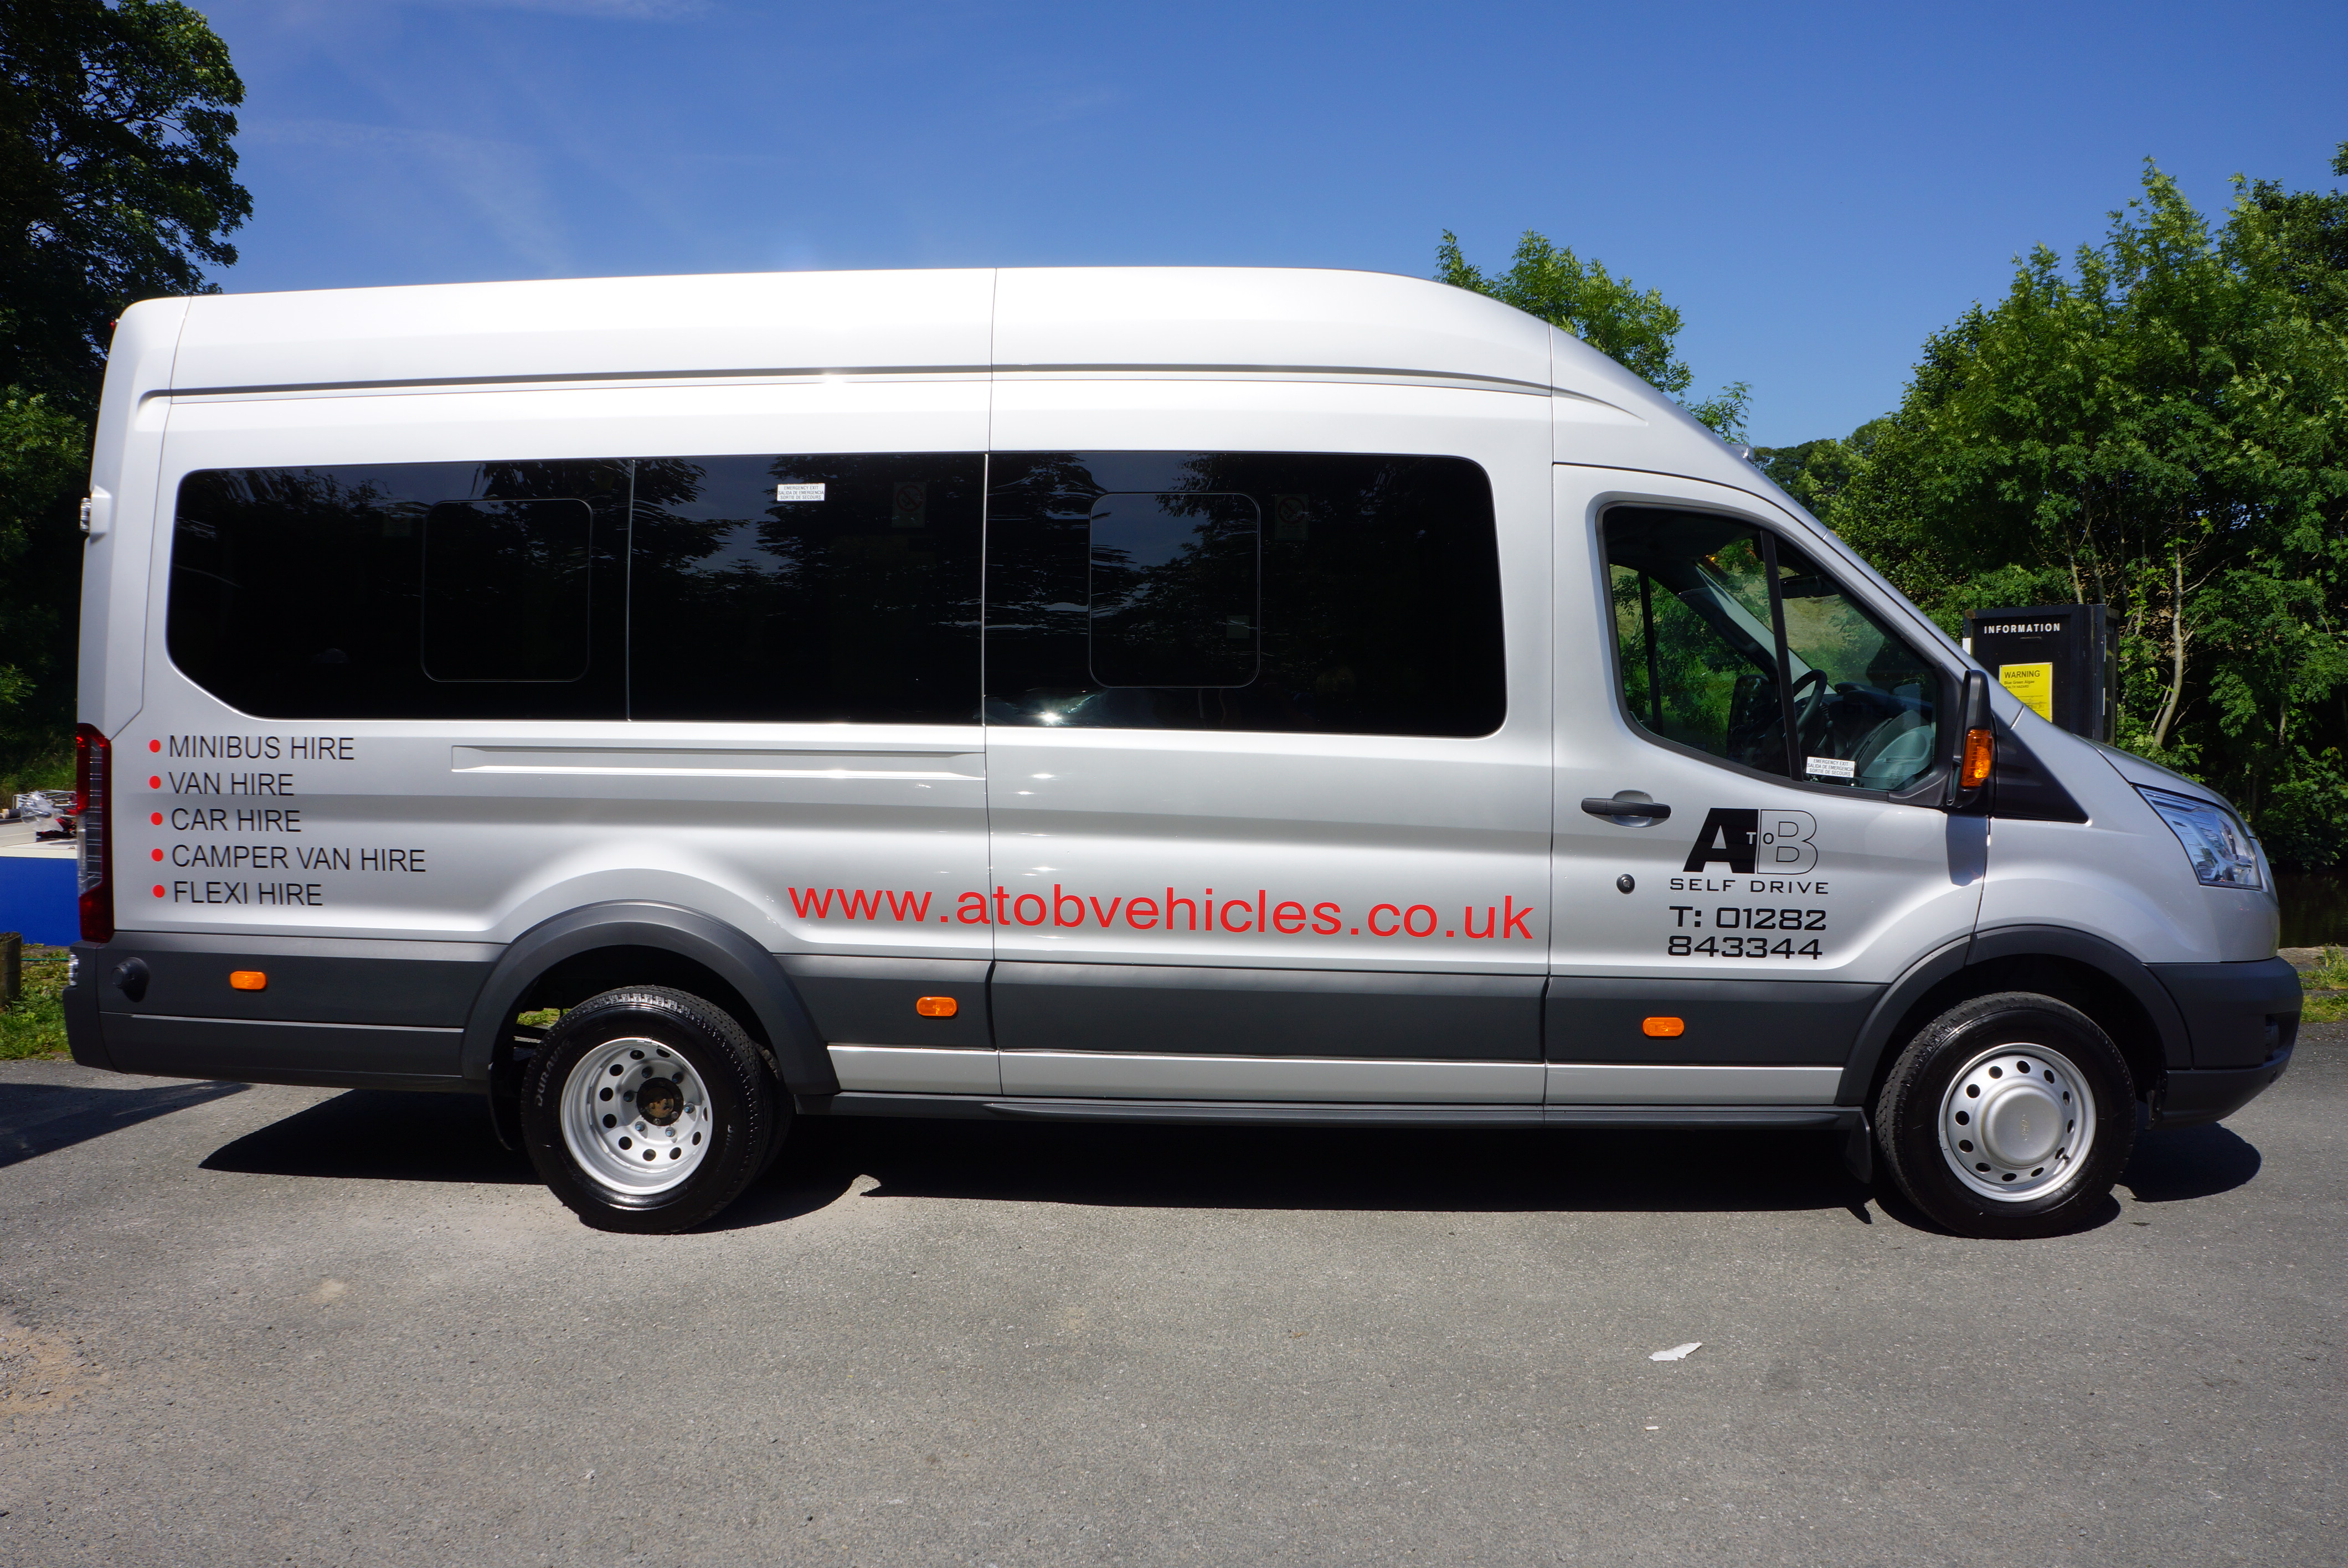 hall's travel minibus hire